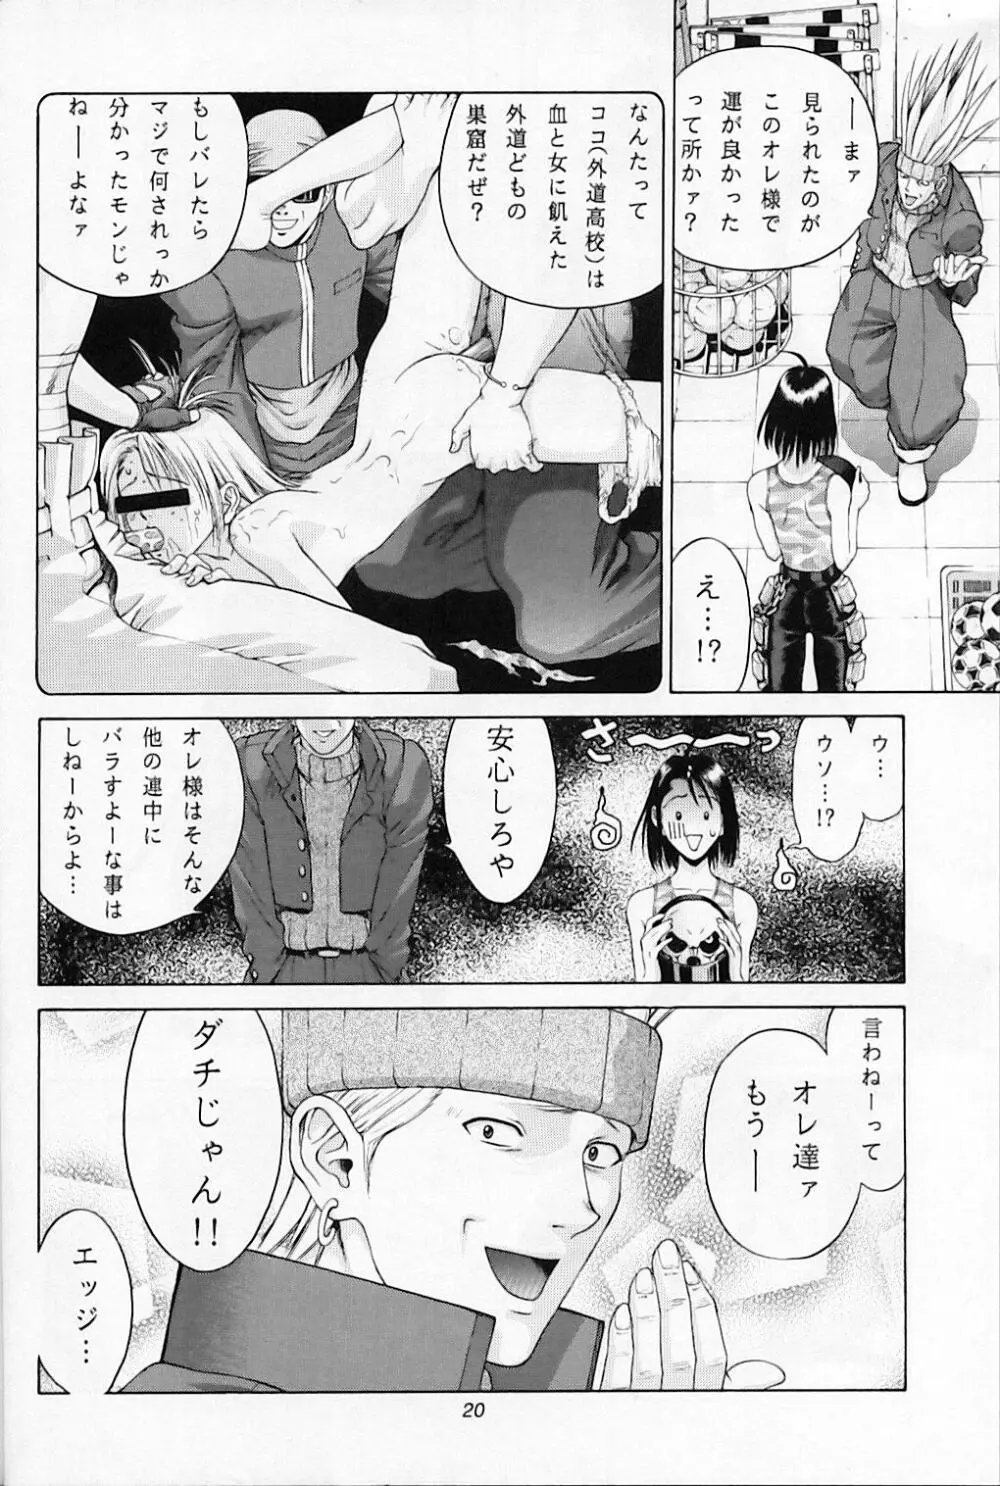 CAPCOMっち - page21